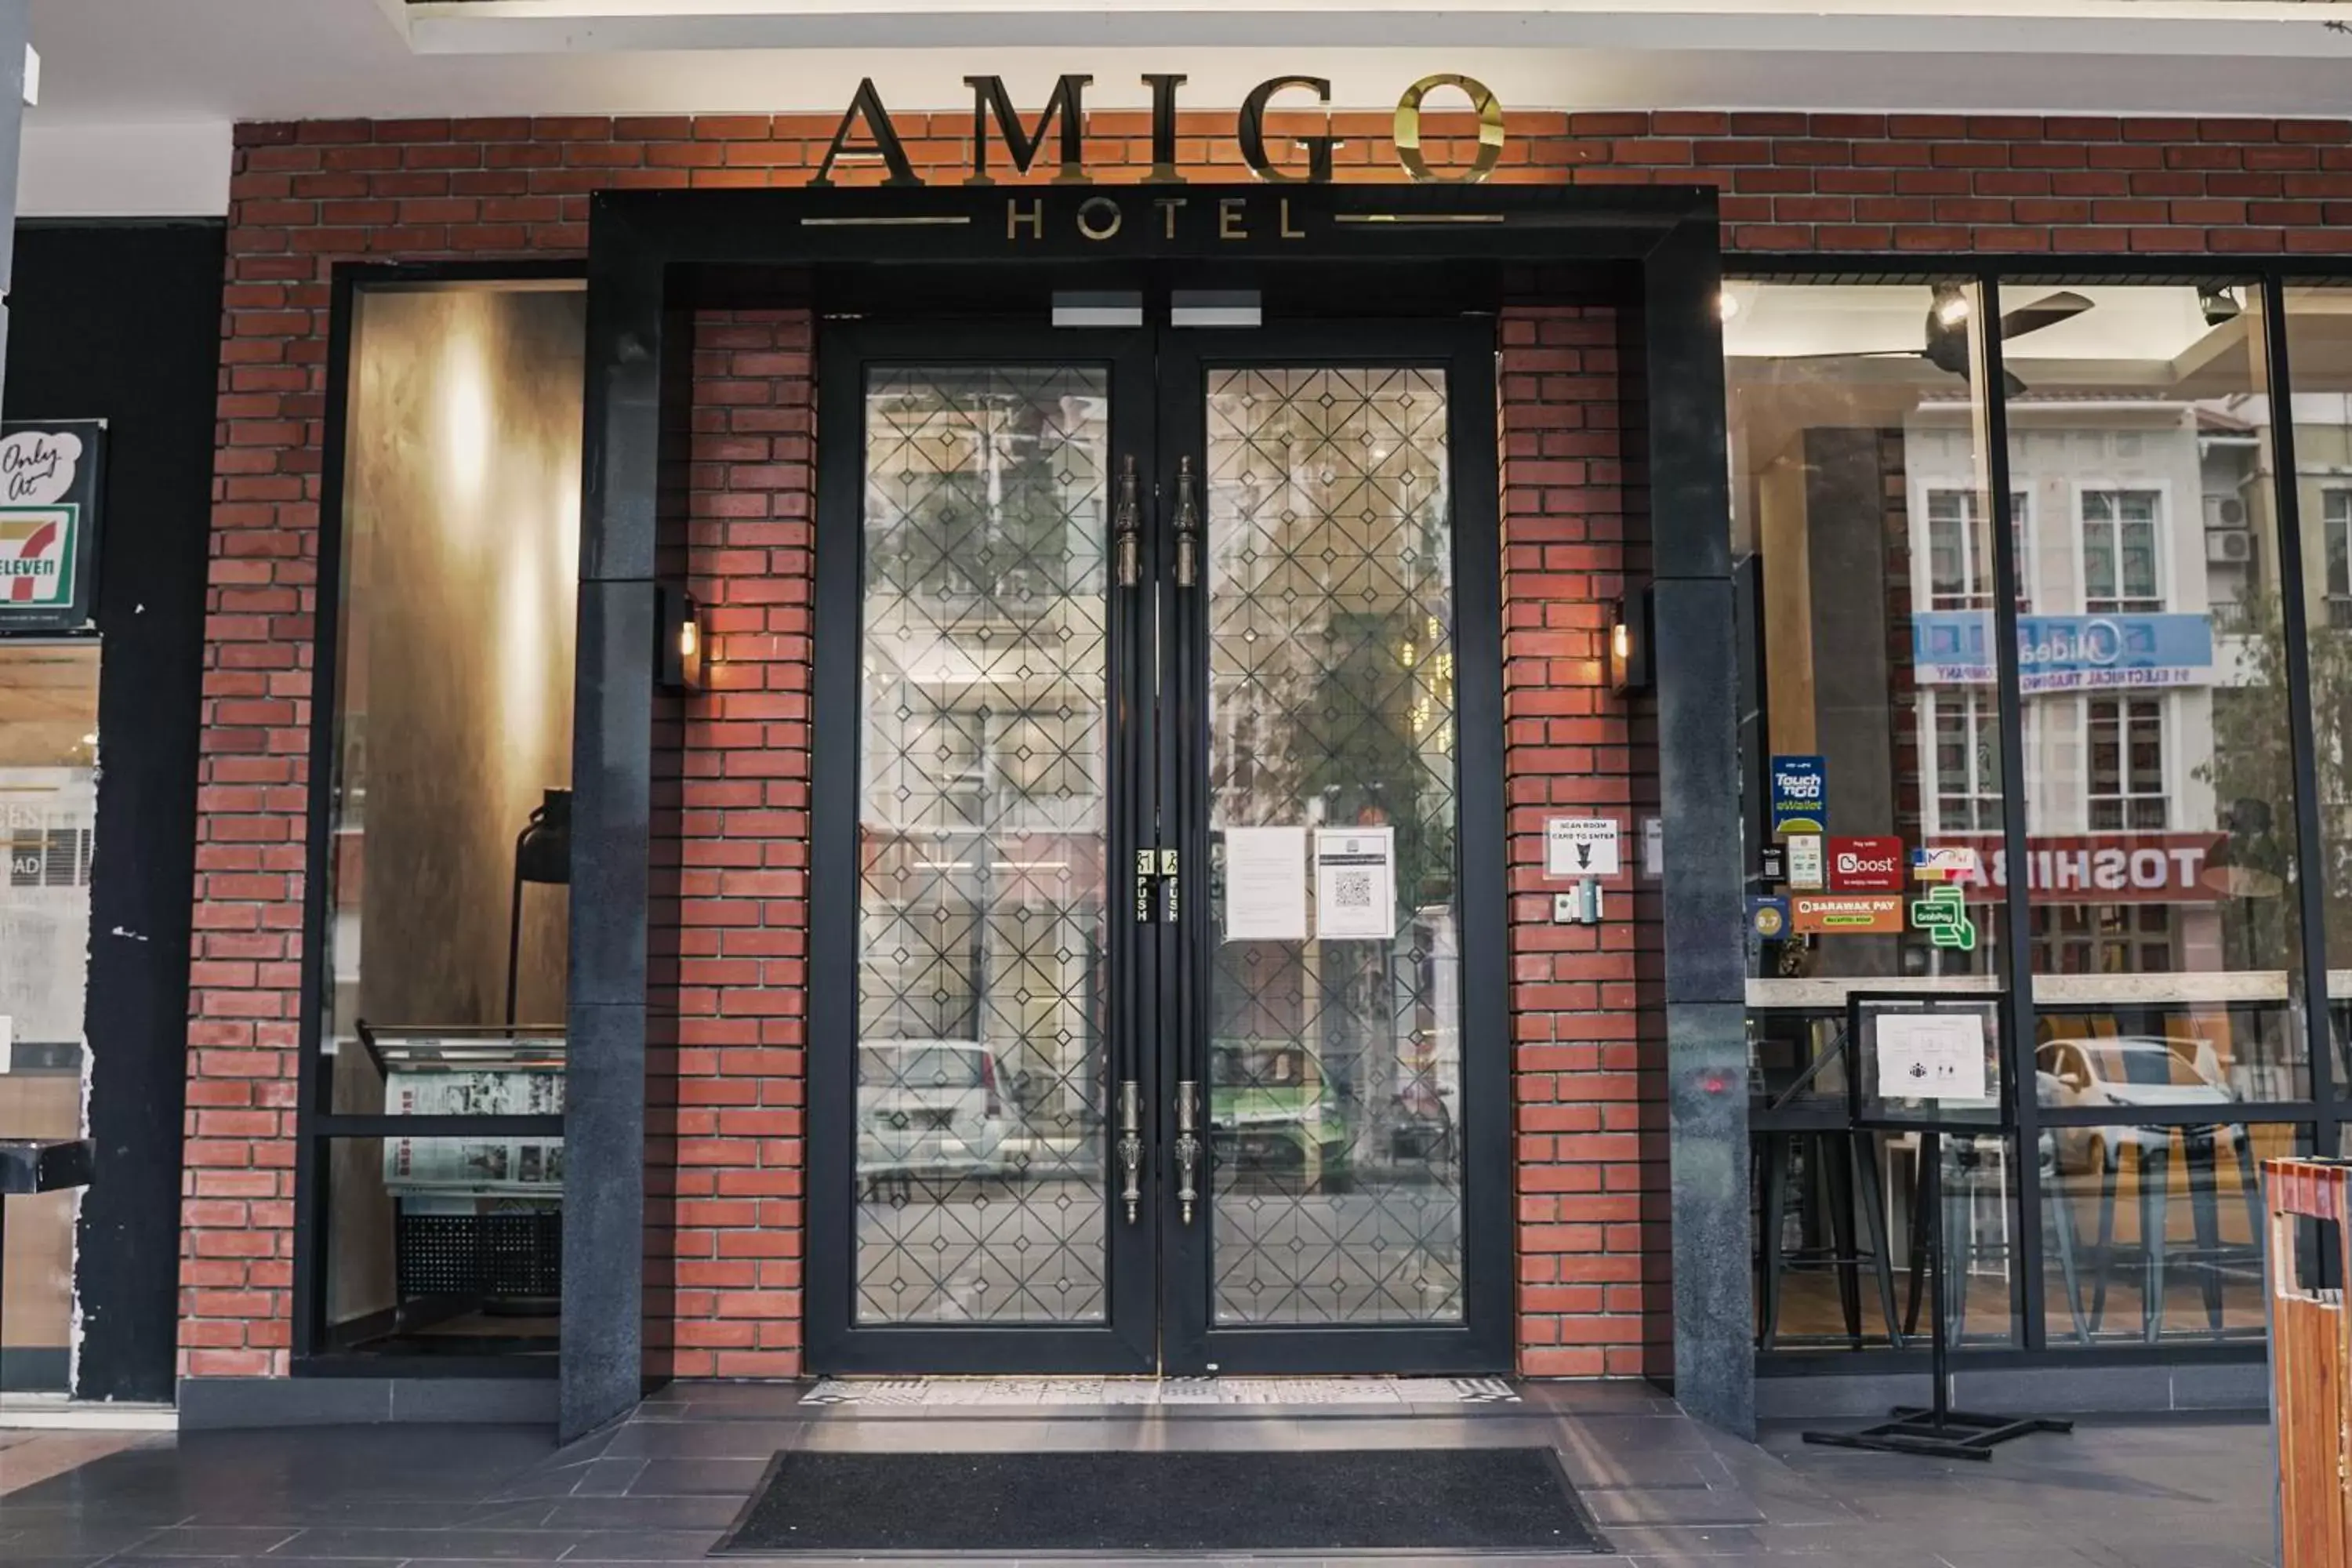 Facade/entrance in Amigo Hotel